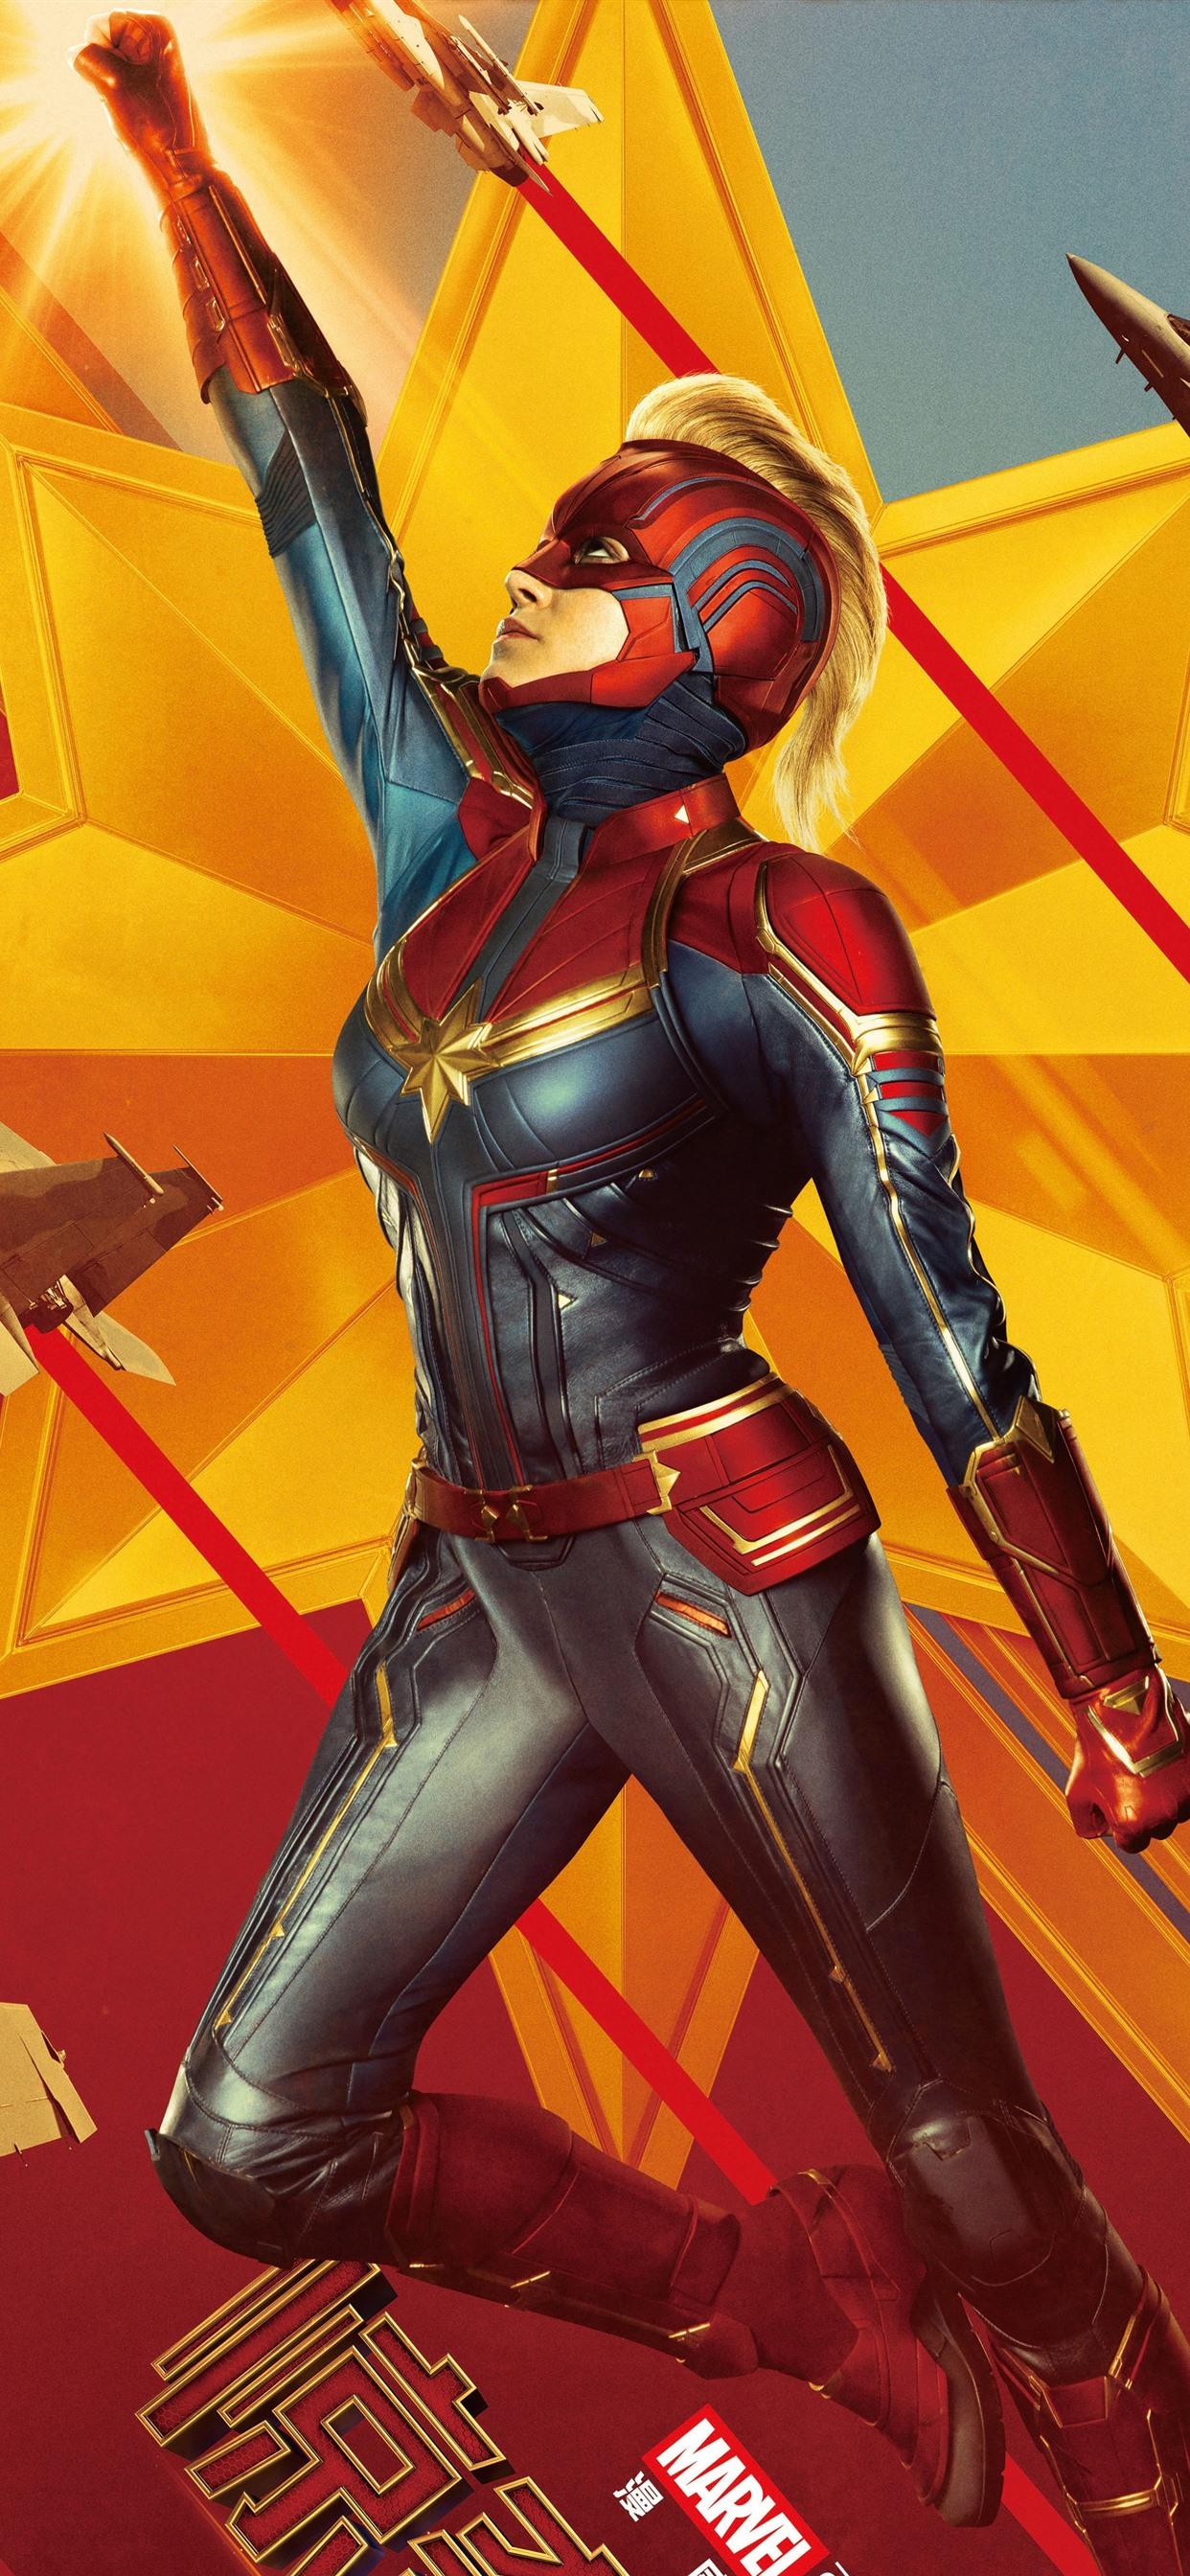 Captain Marvel, 2019 movie 1242x2688 iPhone XS Max wallpaper